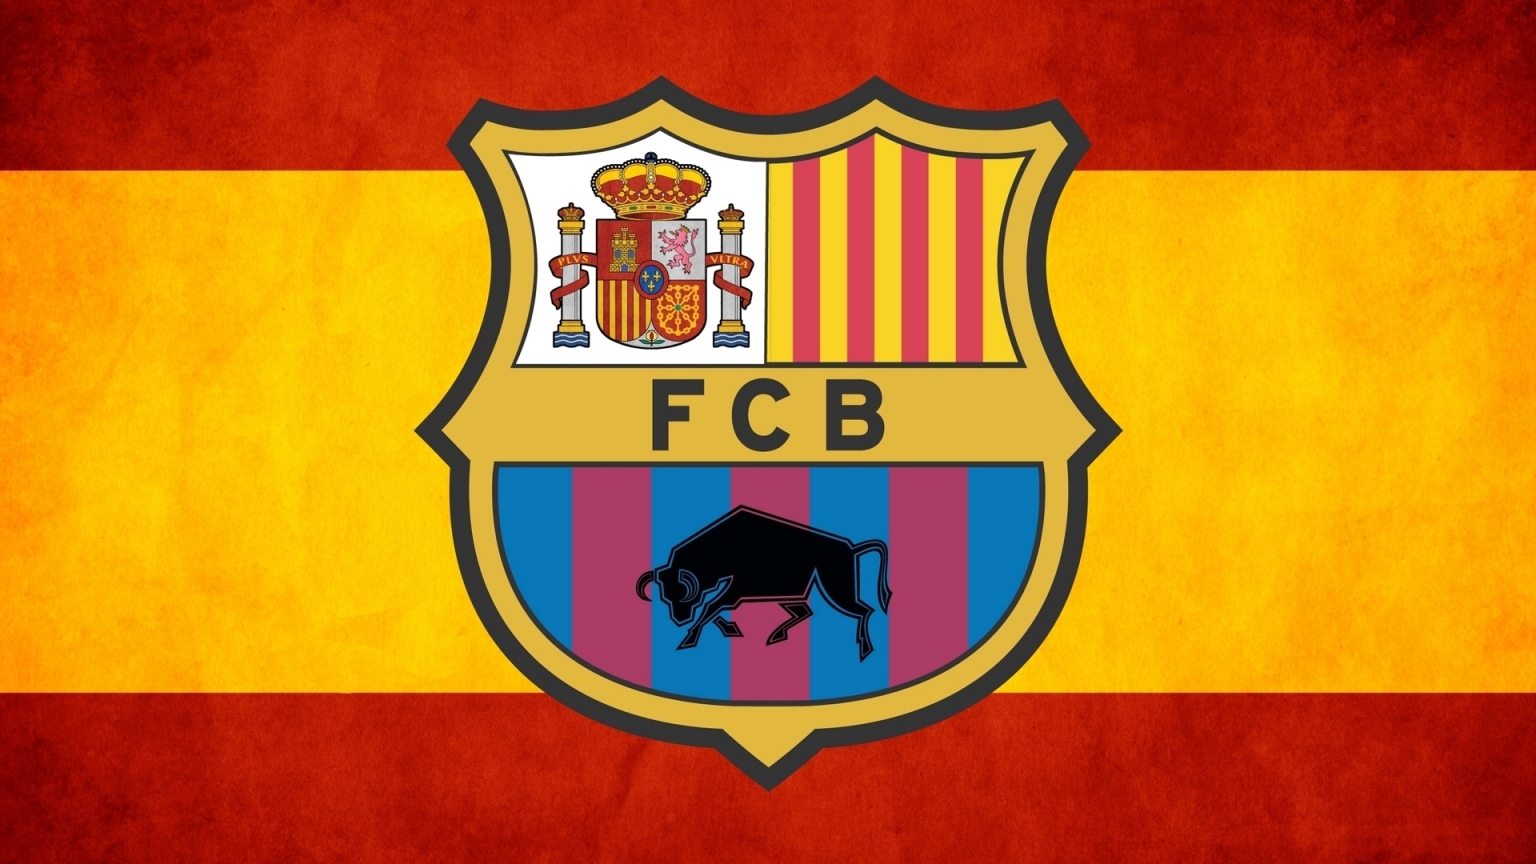 Barca Logo for 1536 x 864 HDTV resolution